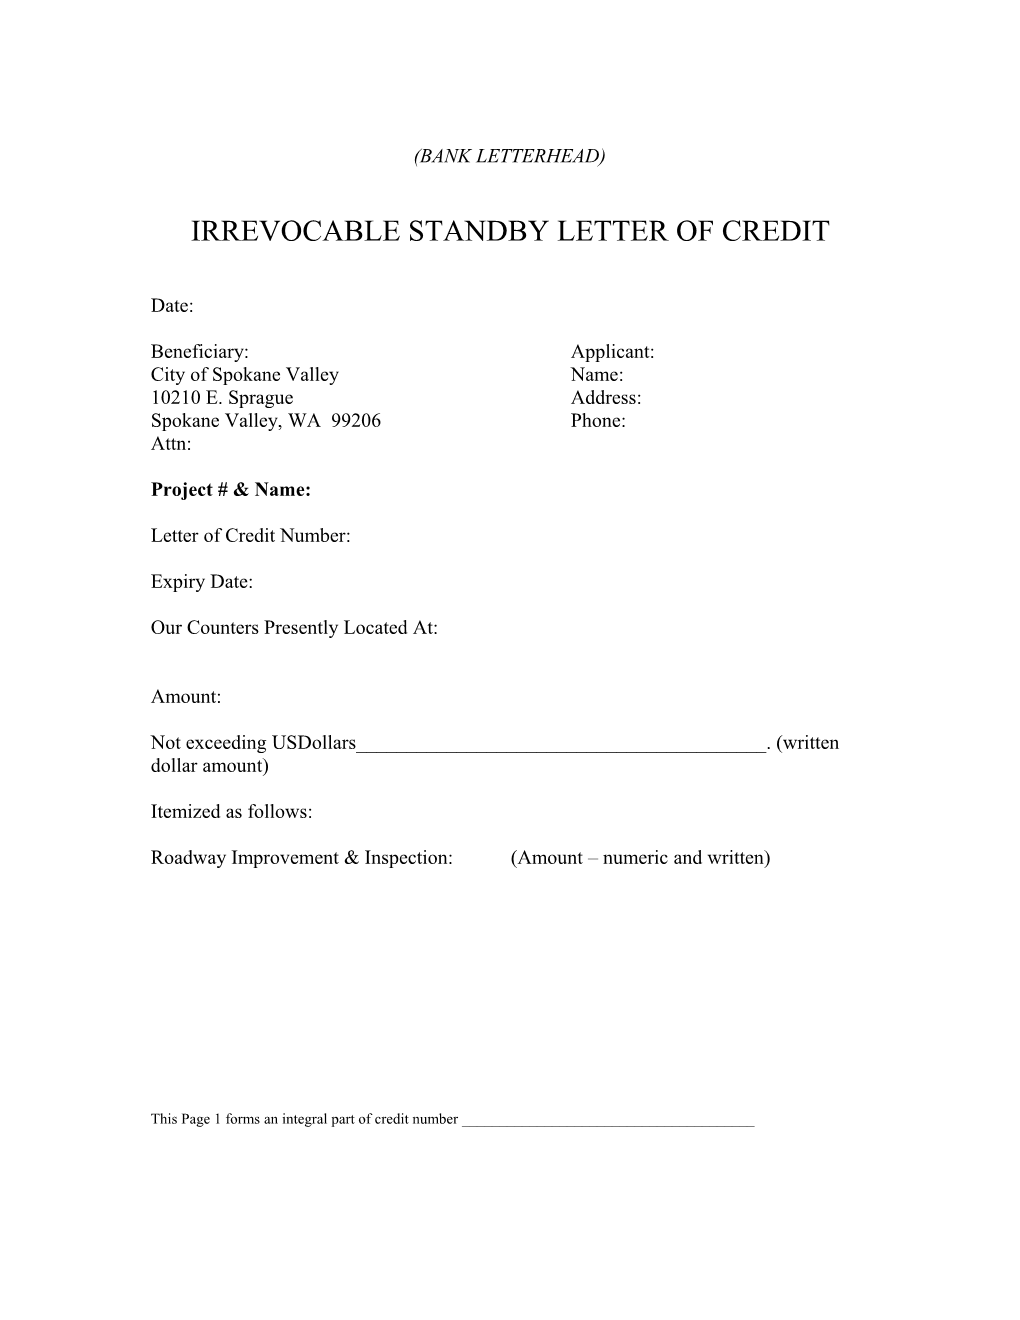 Sample Letter of Credit s1